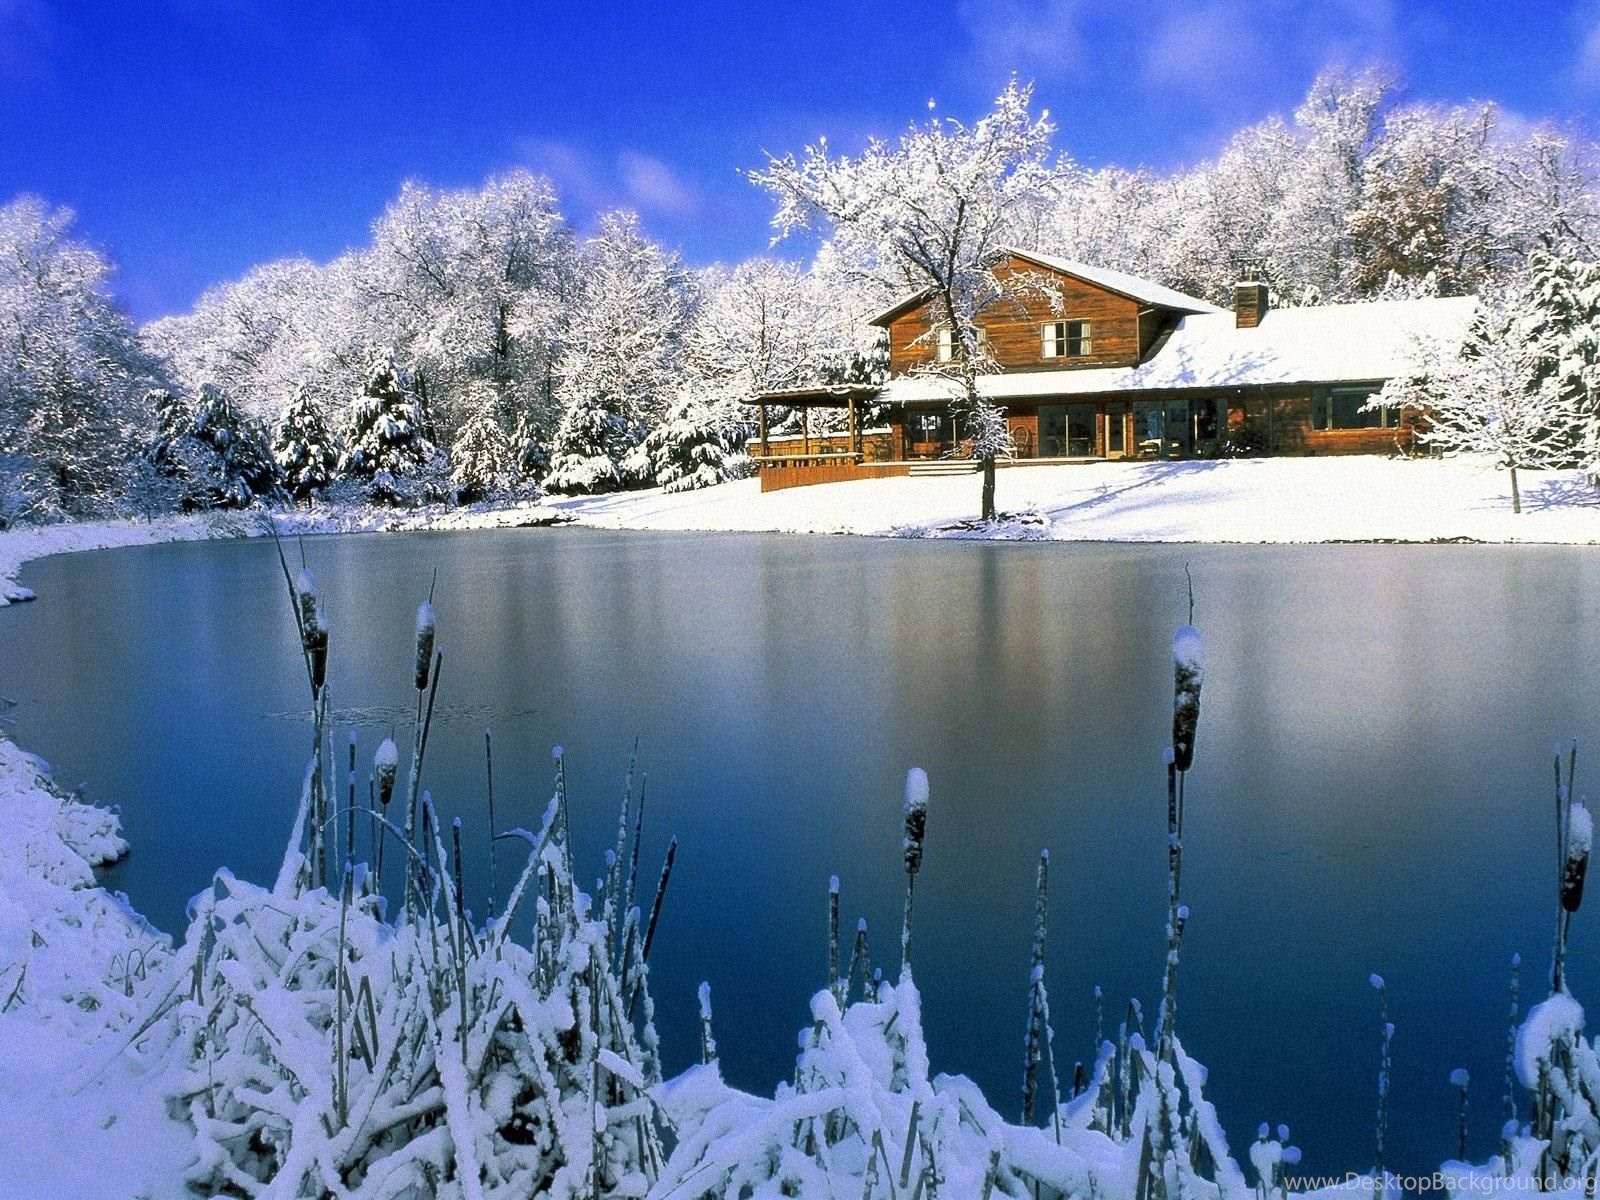 Winter Landscape Wallpapers HD Wallpaper Backgrounds Of Your Choice Desktop Backgrounds